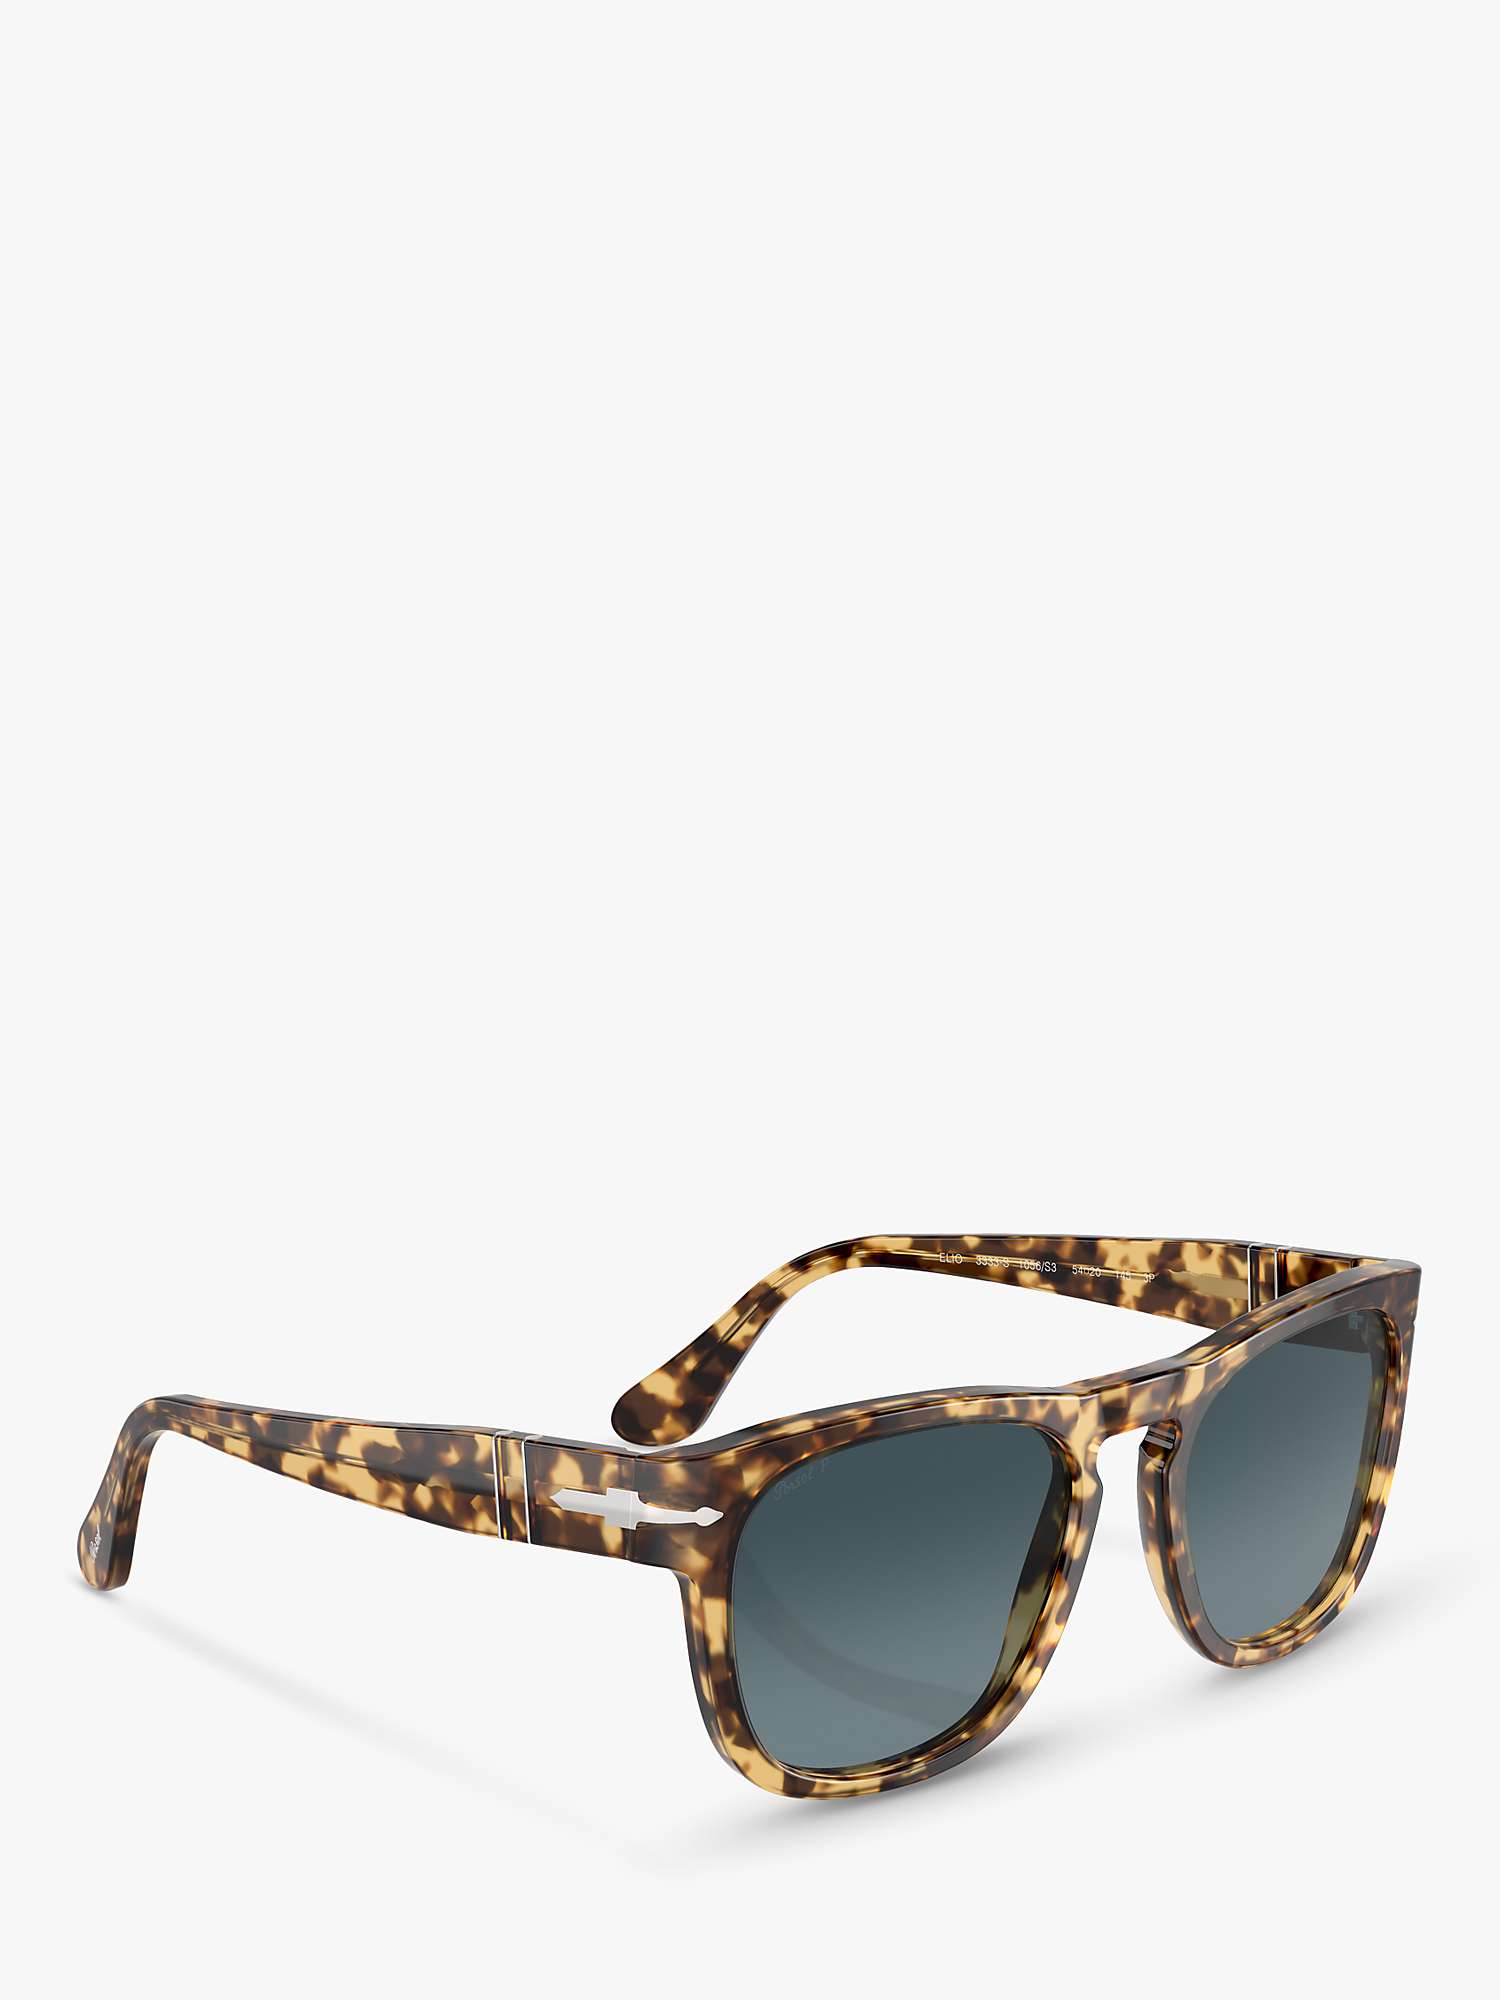 Buy Persol PO3333S Unisex Polarised D-Frame Sunglasses, Tortoise Beige/Blue Gradient Online at johnlewis.com